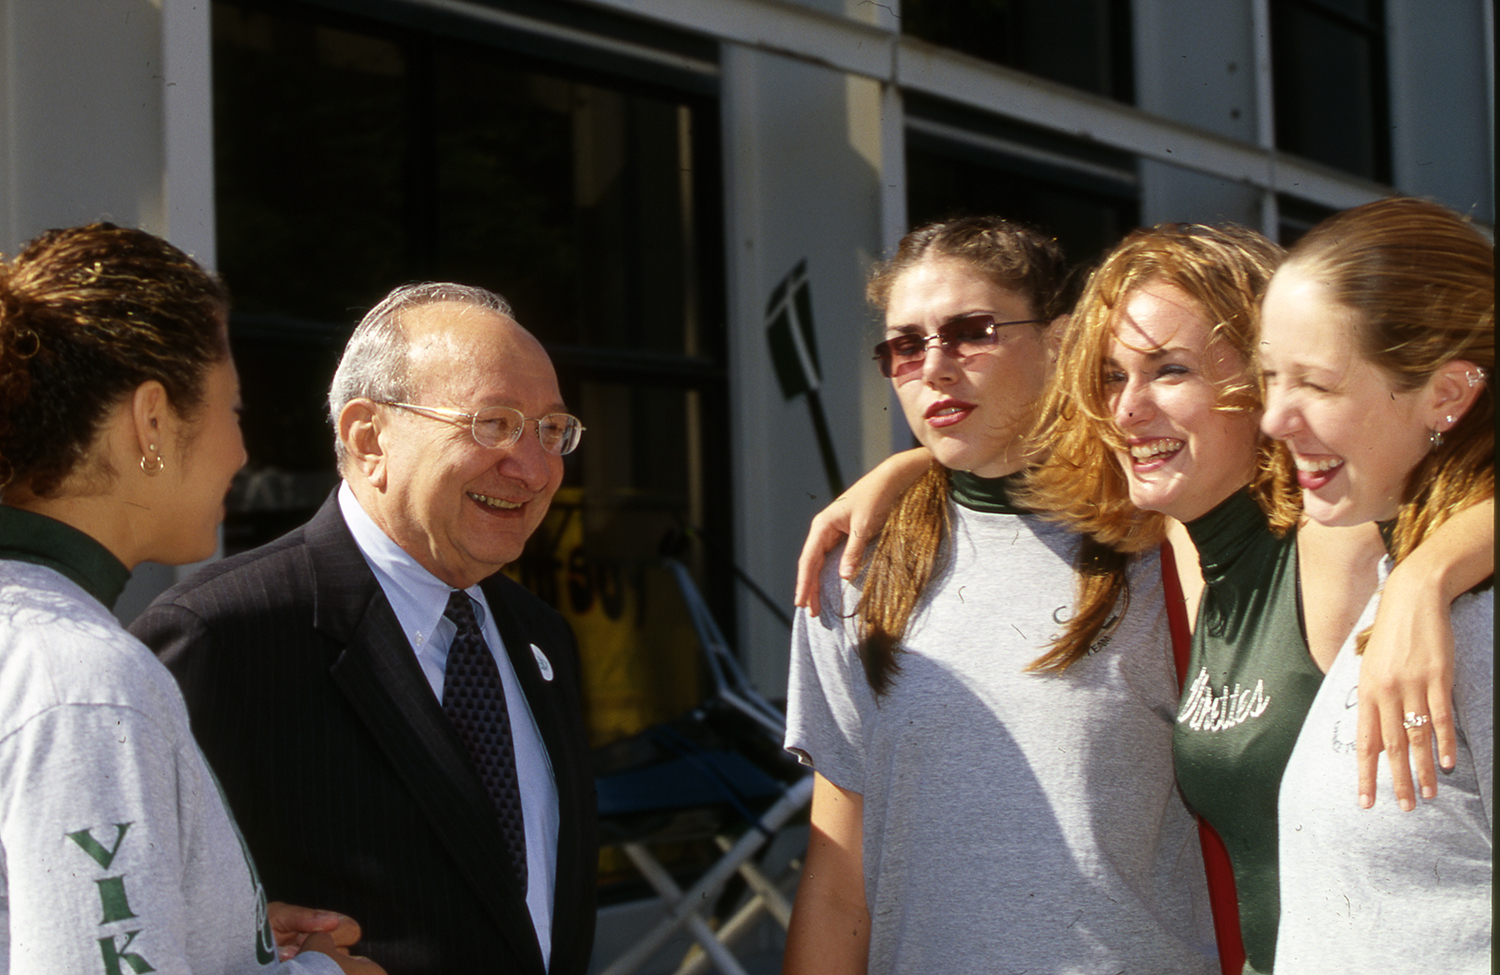 President Schwartz and students